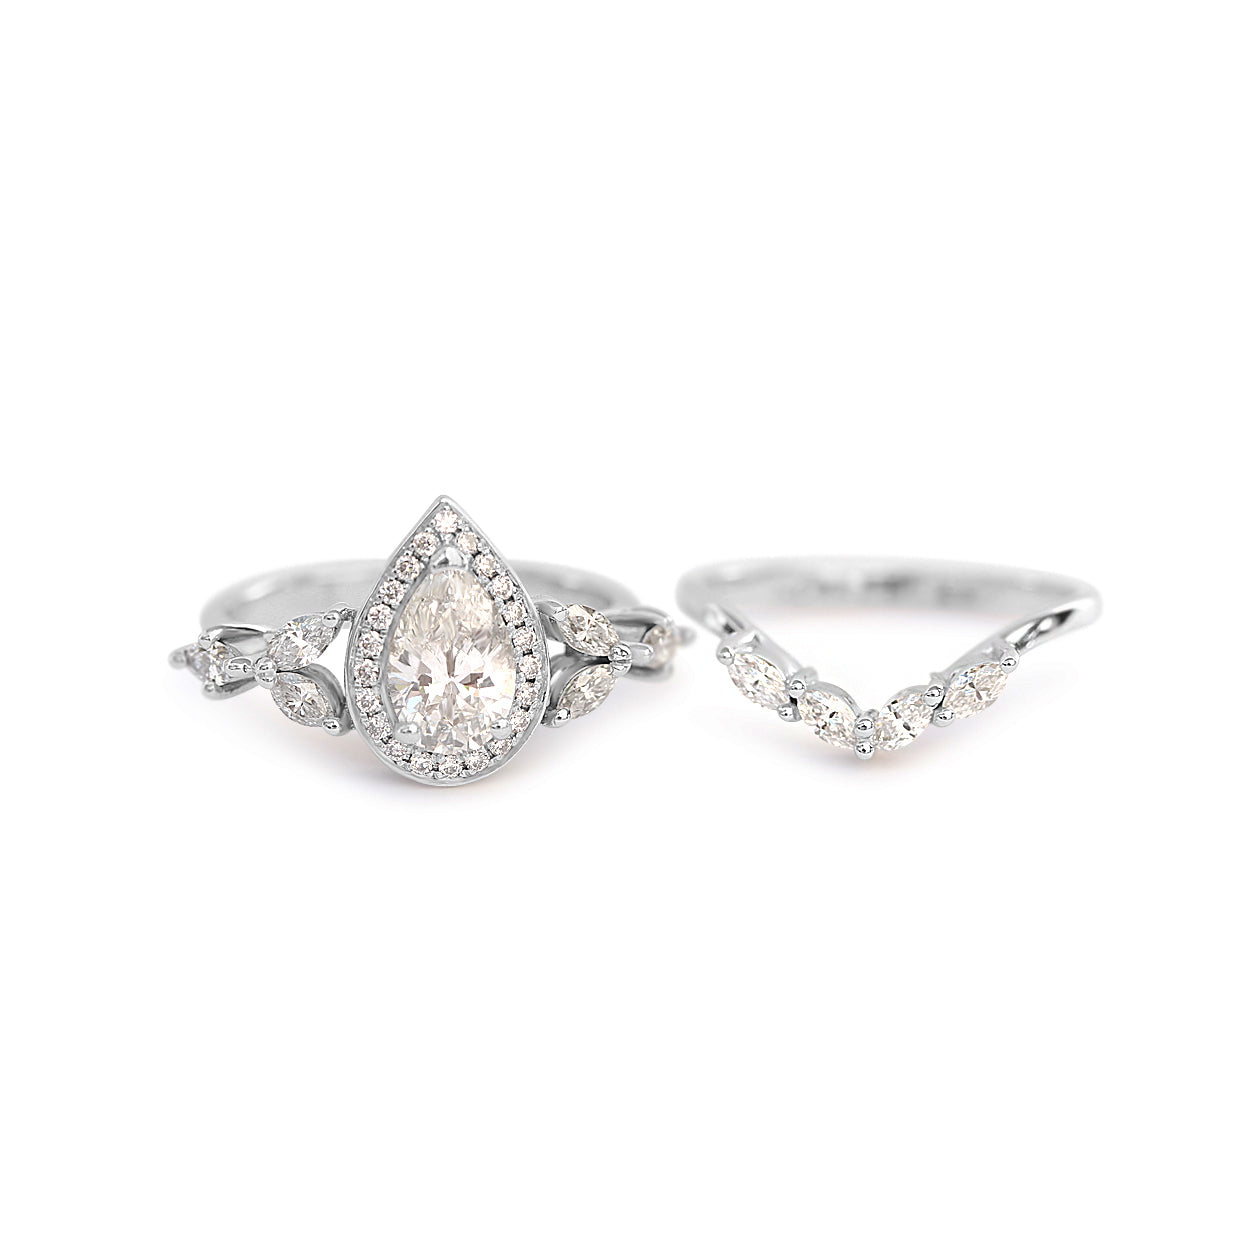 Muse Unique Pear Diamond Engagement Rings Set - 1.68 Carat - sillyshinydiamonds